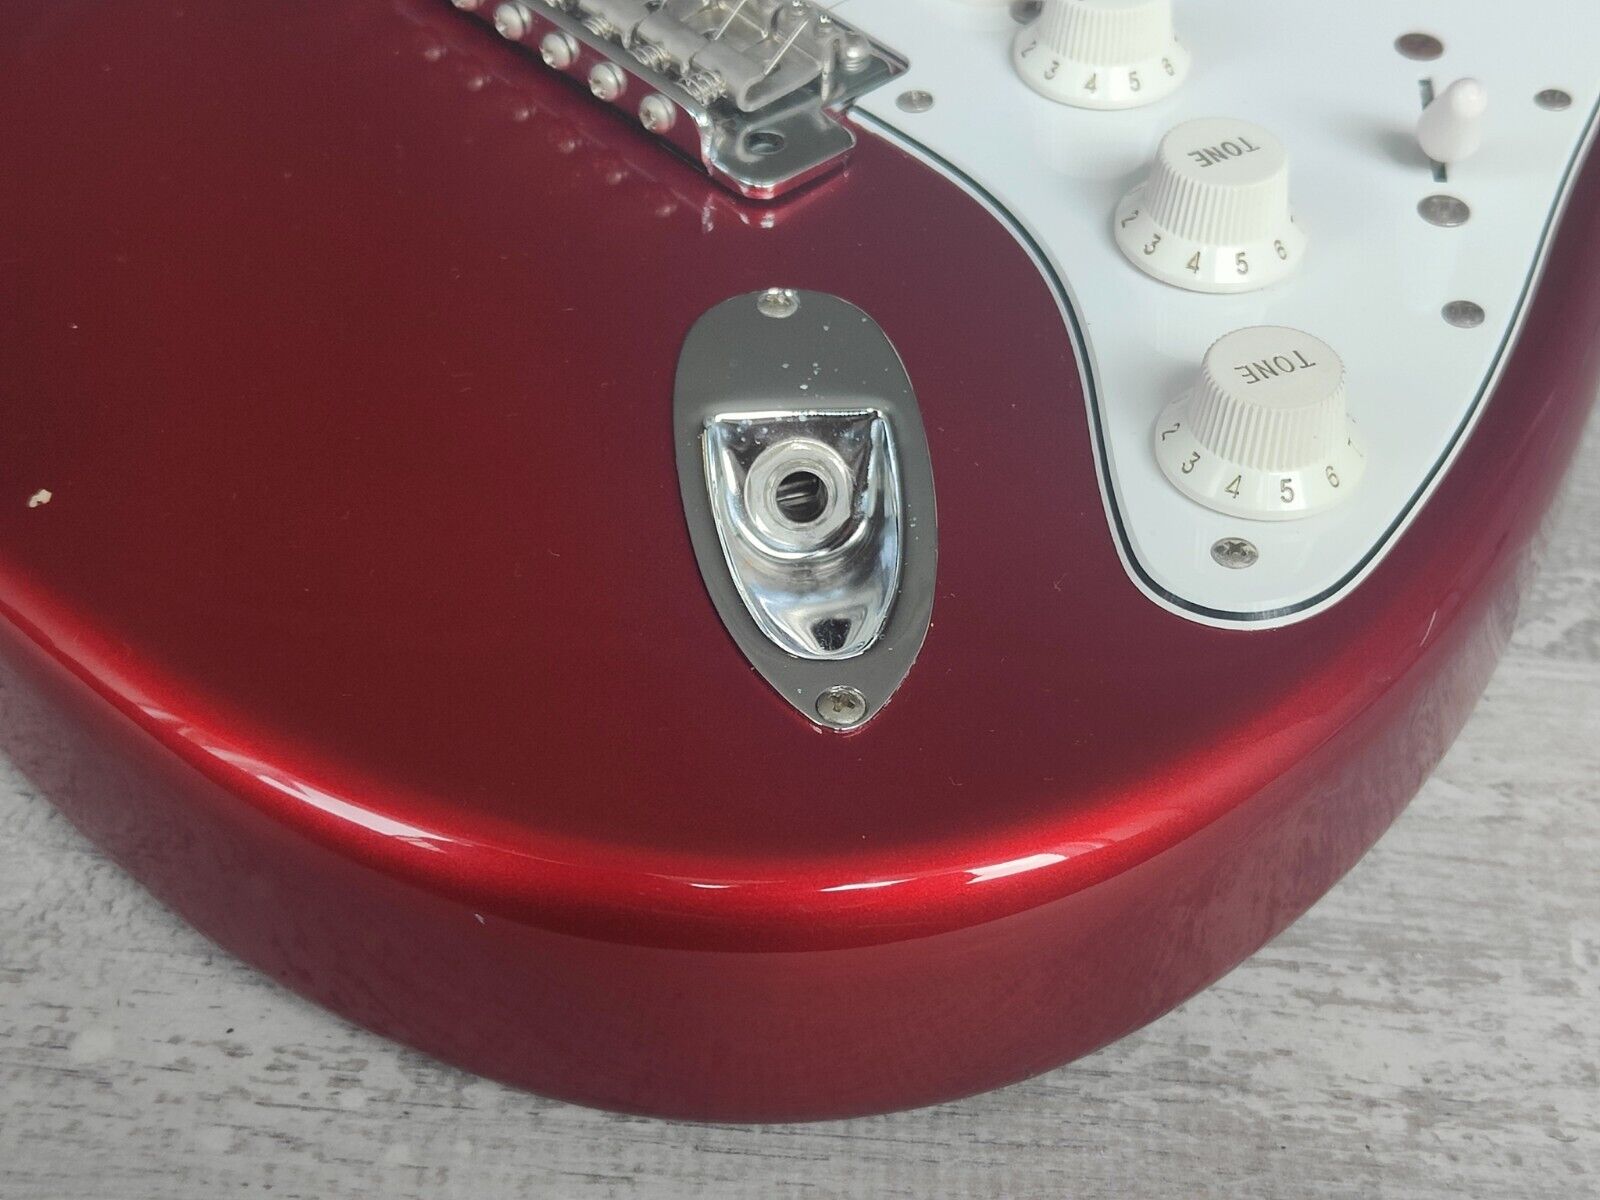 2007 Fender Japan Stratocaster Standard (Candy Apple Red)